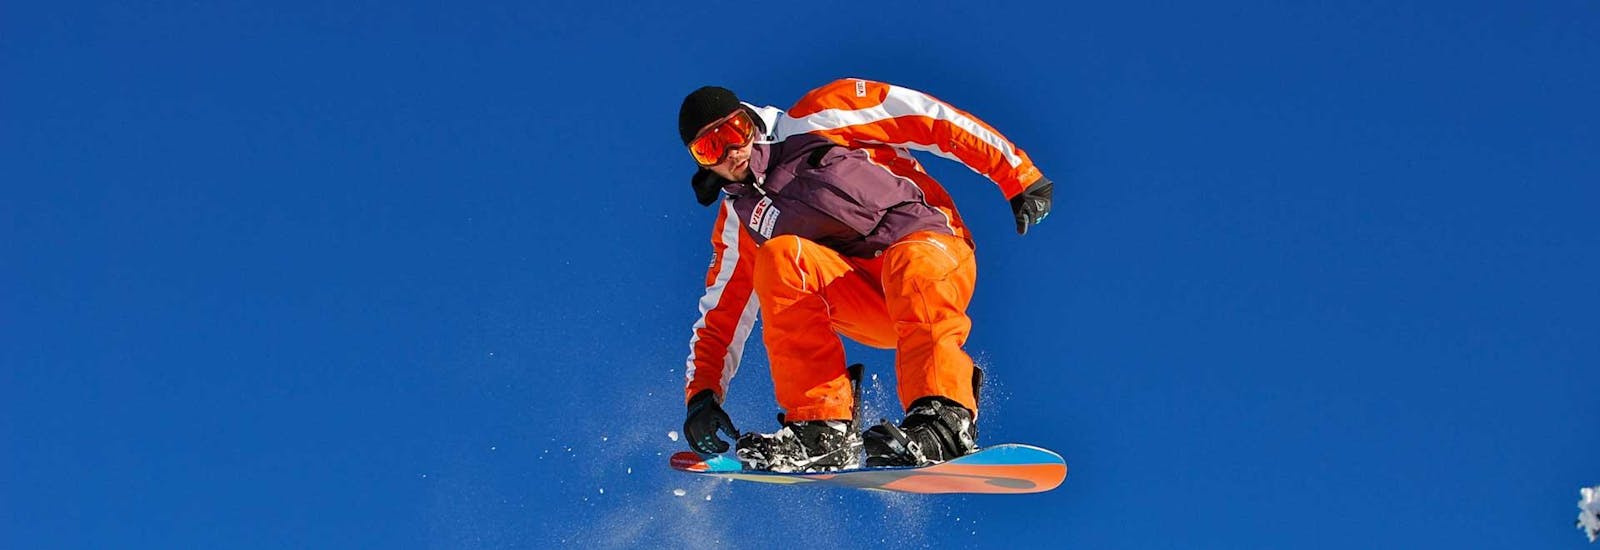 Kids & Volwassenen Snowboardlessen "Intensief" in Großarl met Skischule Toni Gruber.